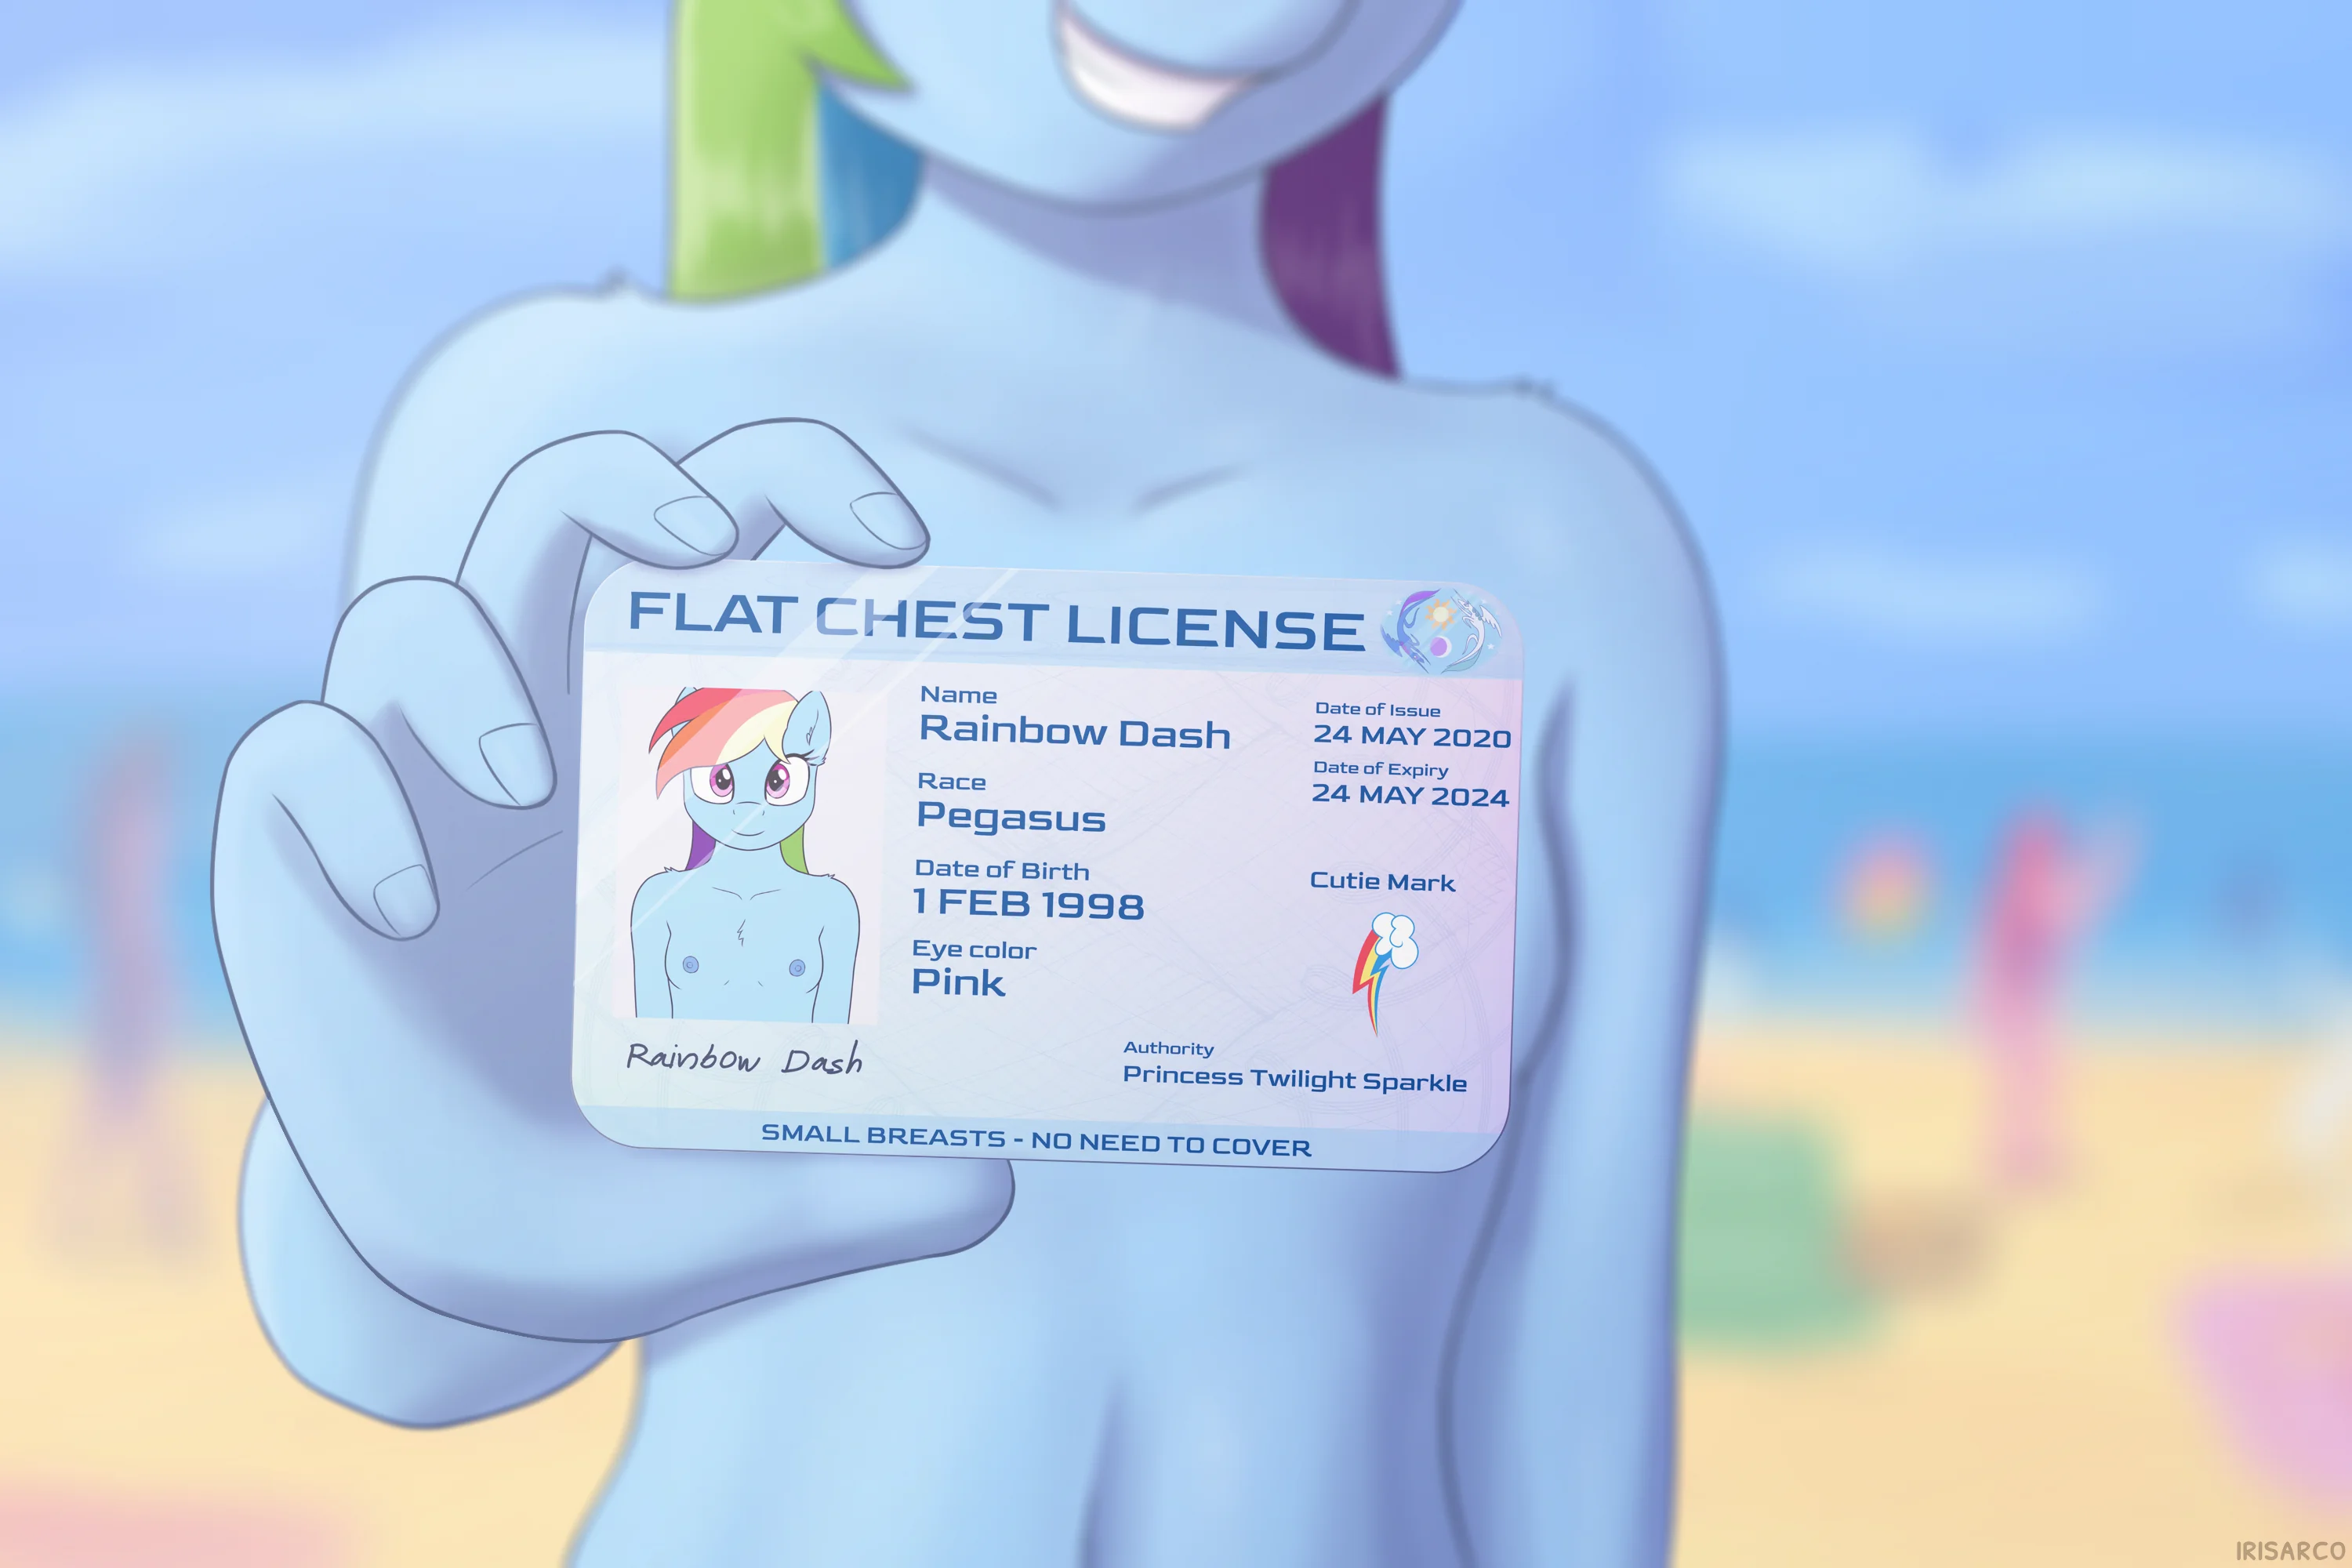 Flat Chest License (1/2)